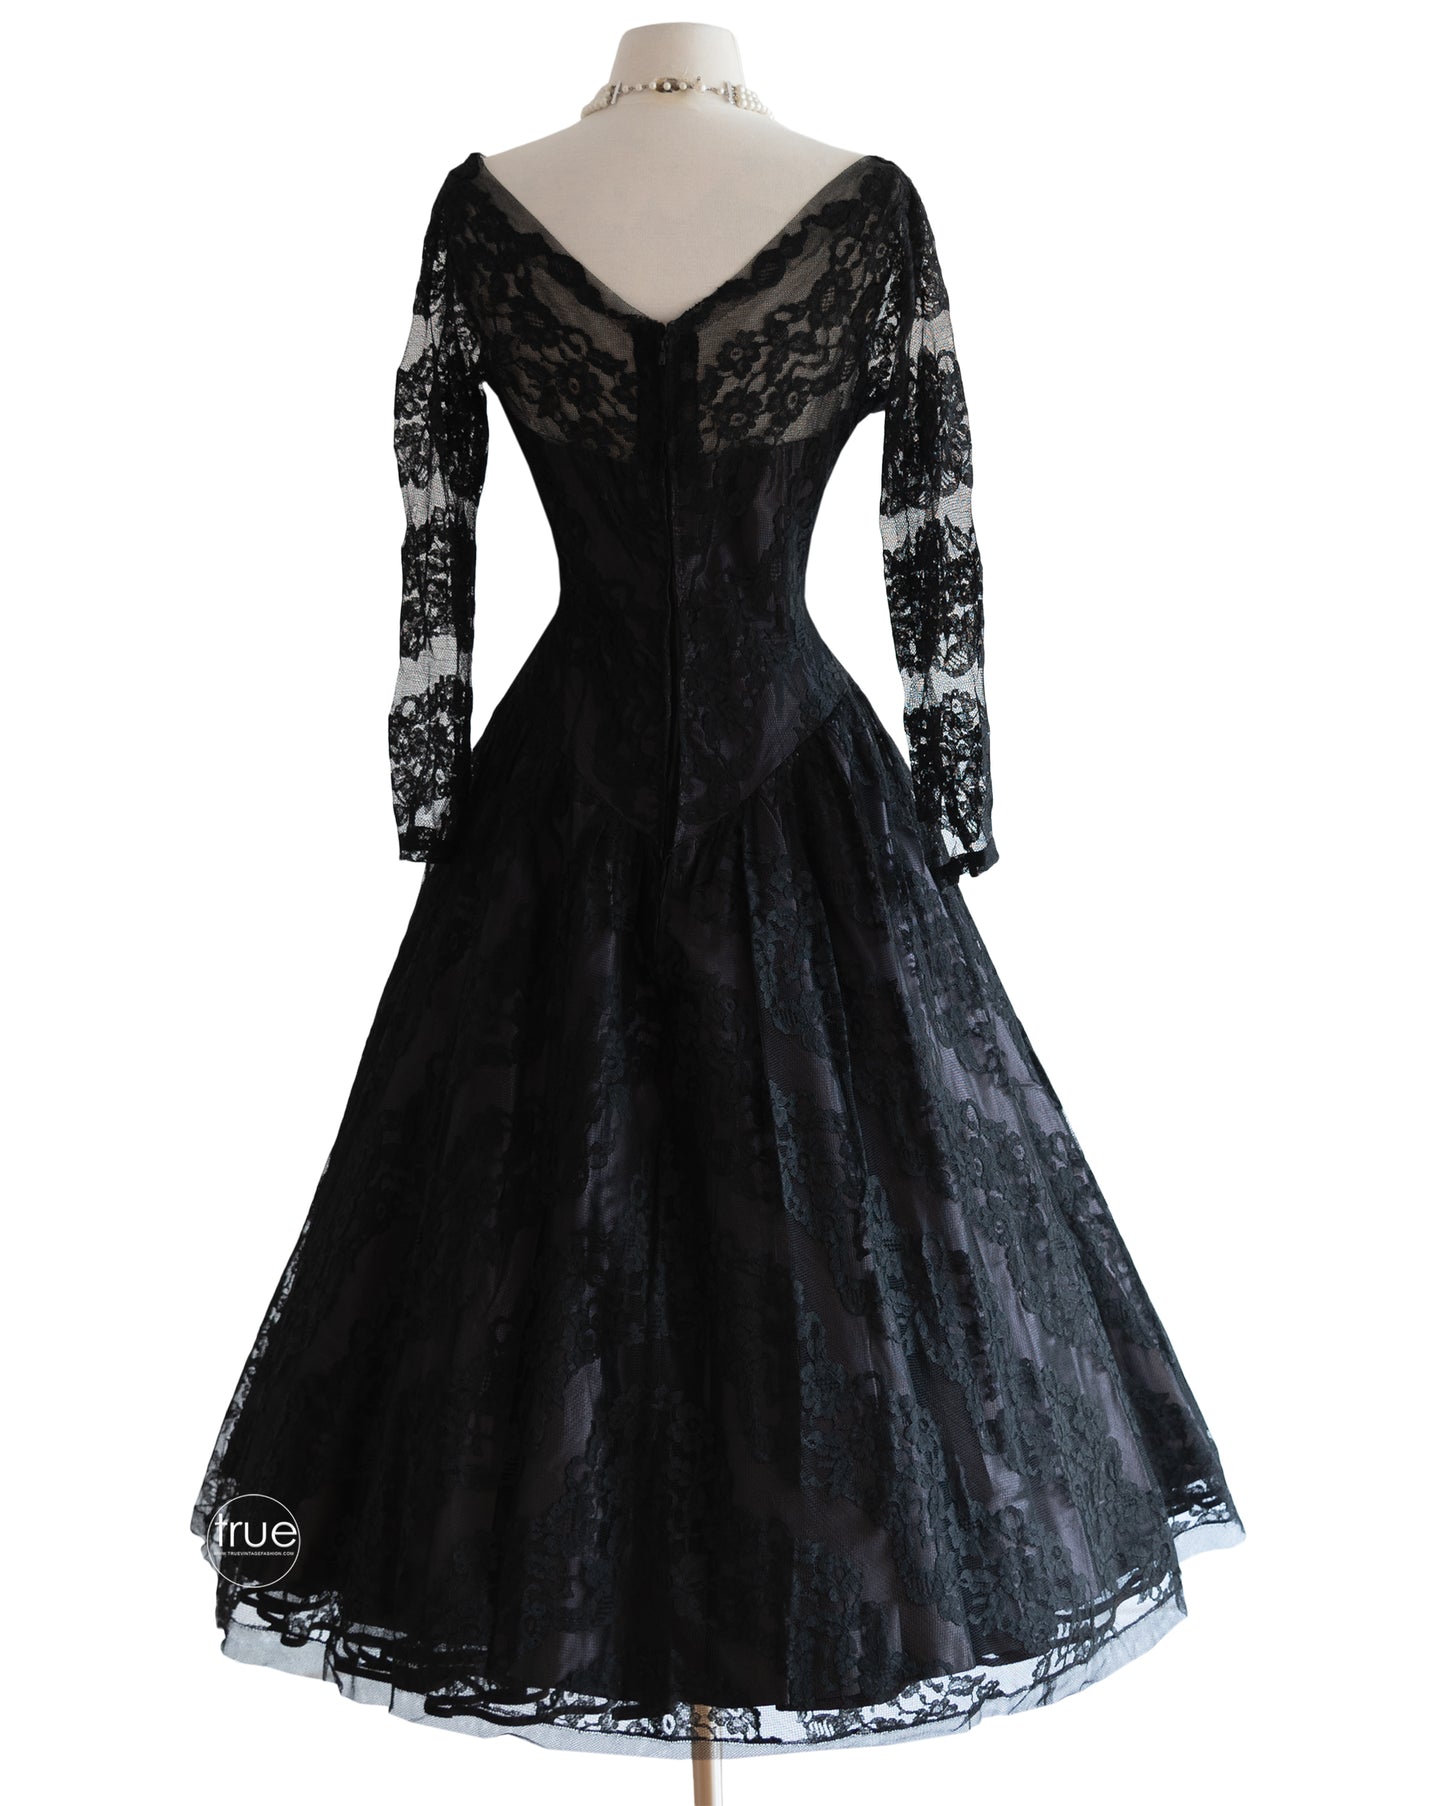 vintage 1950's dress ...decadent C. WORTH black lace dress